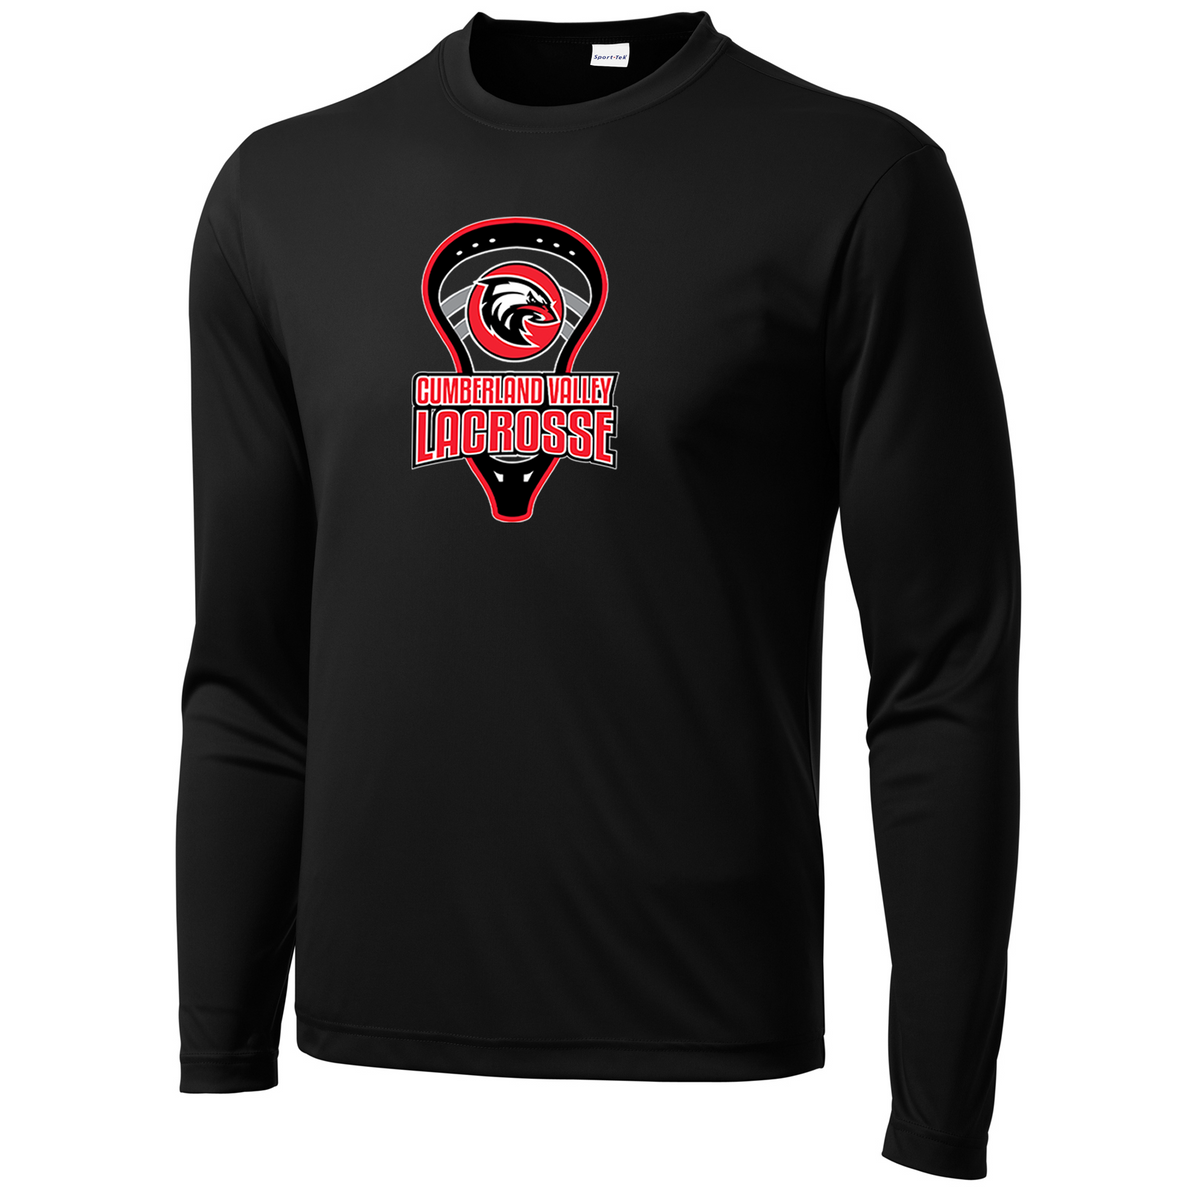 Cumberland Valley Lacrosse Long Sleeve Performance Shirt